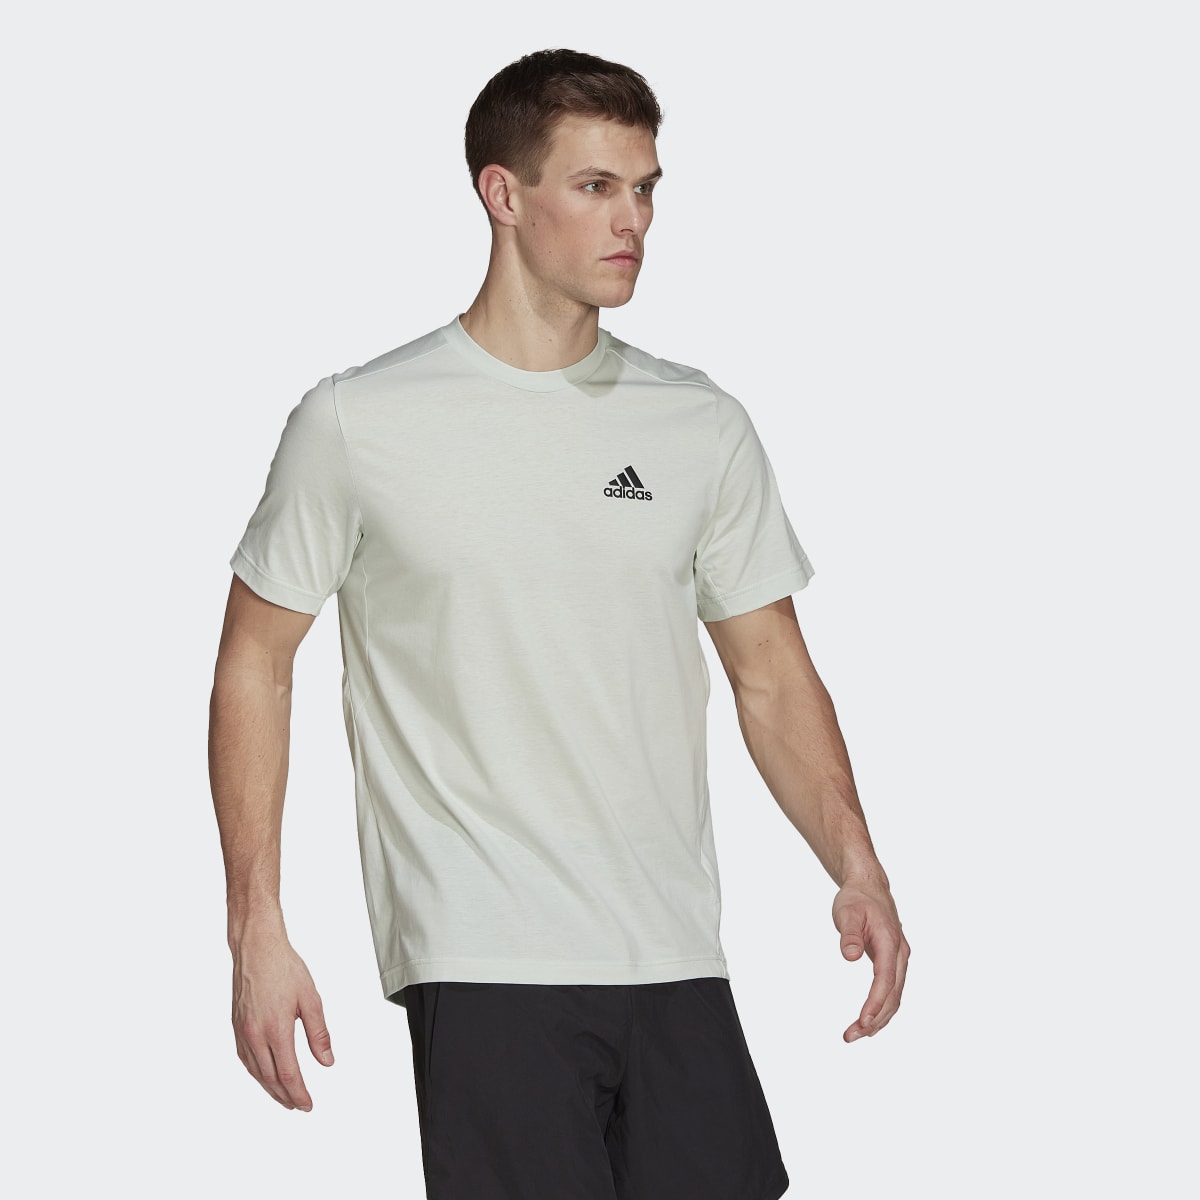 Adidas T-shirt AEROREADY Designed 2 Move Feelready Sport. 4